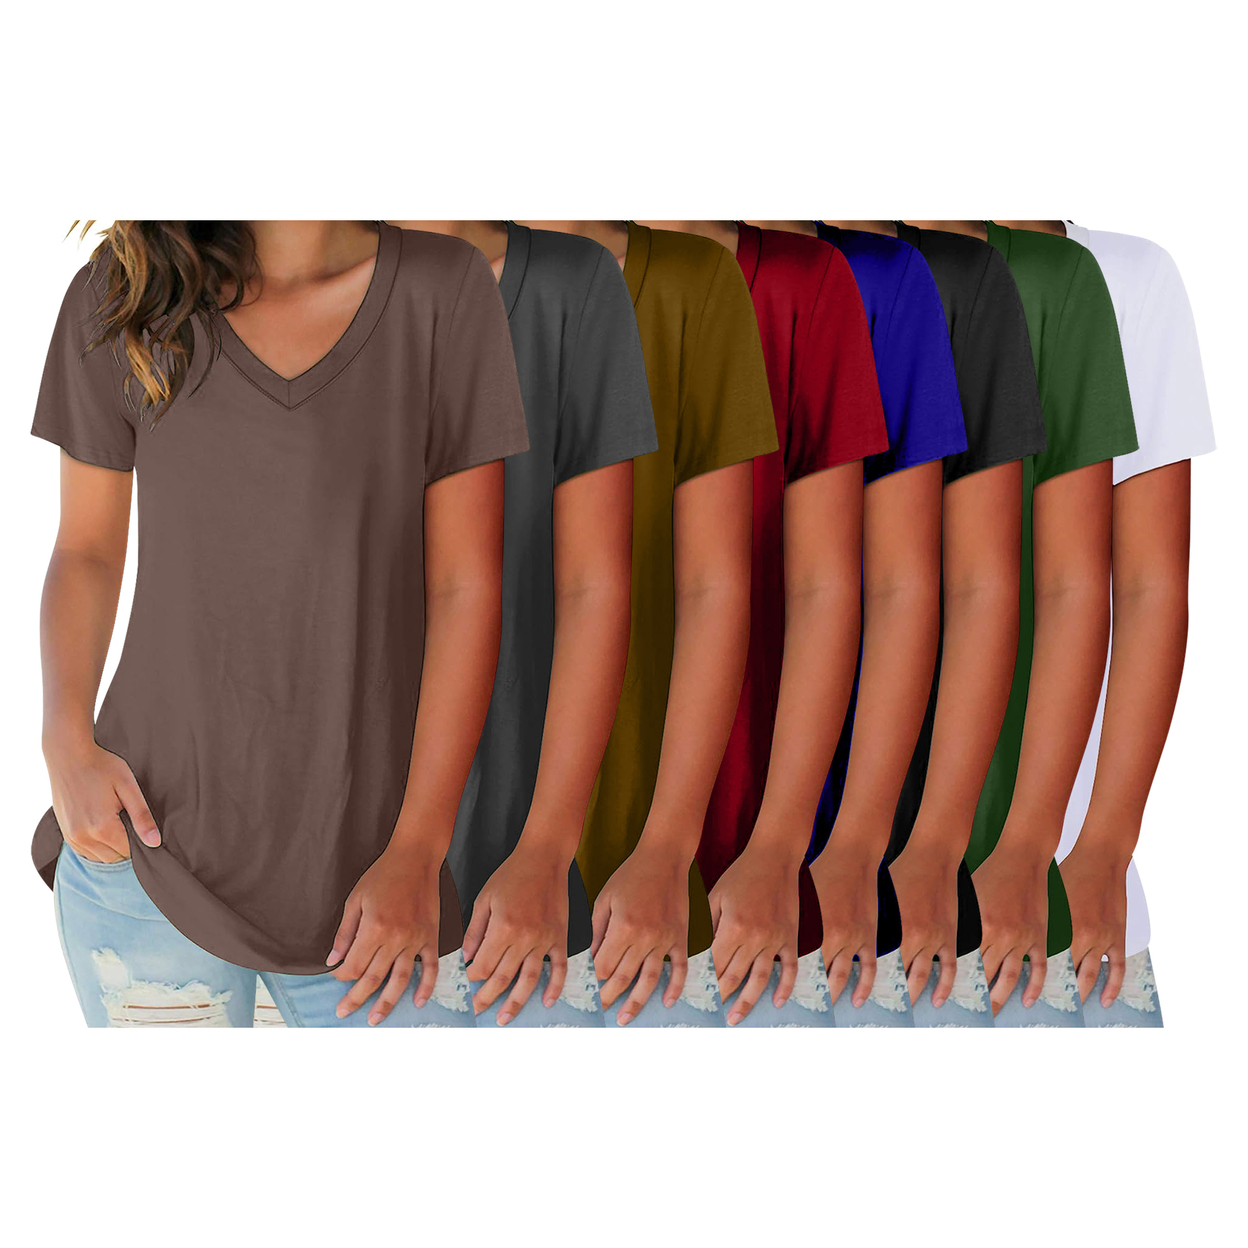 2-Pack: Women's Ultra Soft Smooth Cotton Blend Basic V-Neck Short Sleeve Shirts - Black & Brown, Small